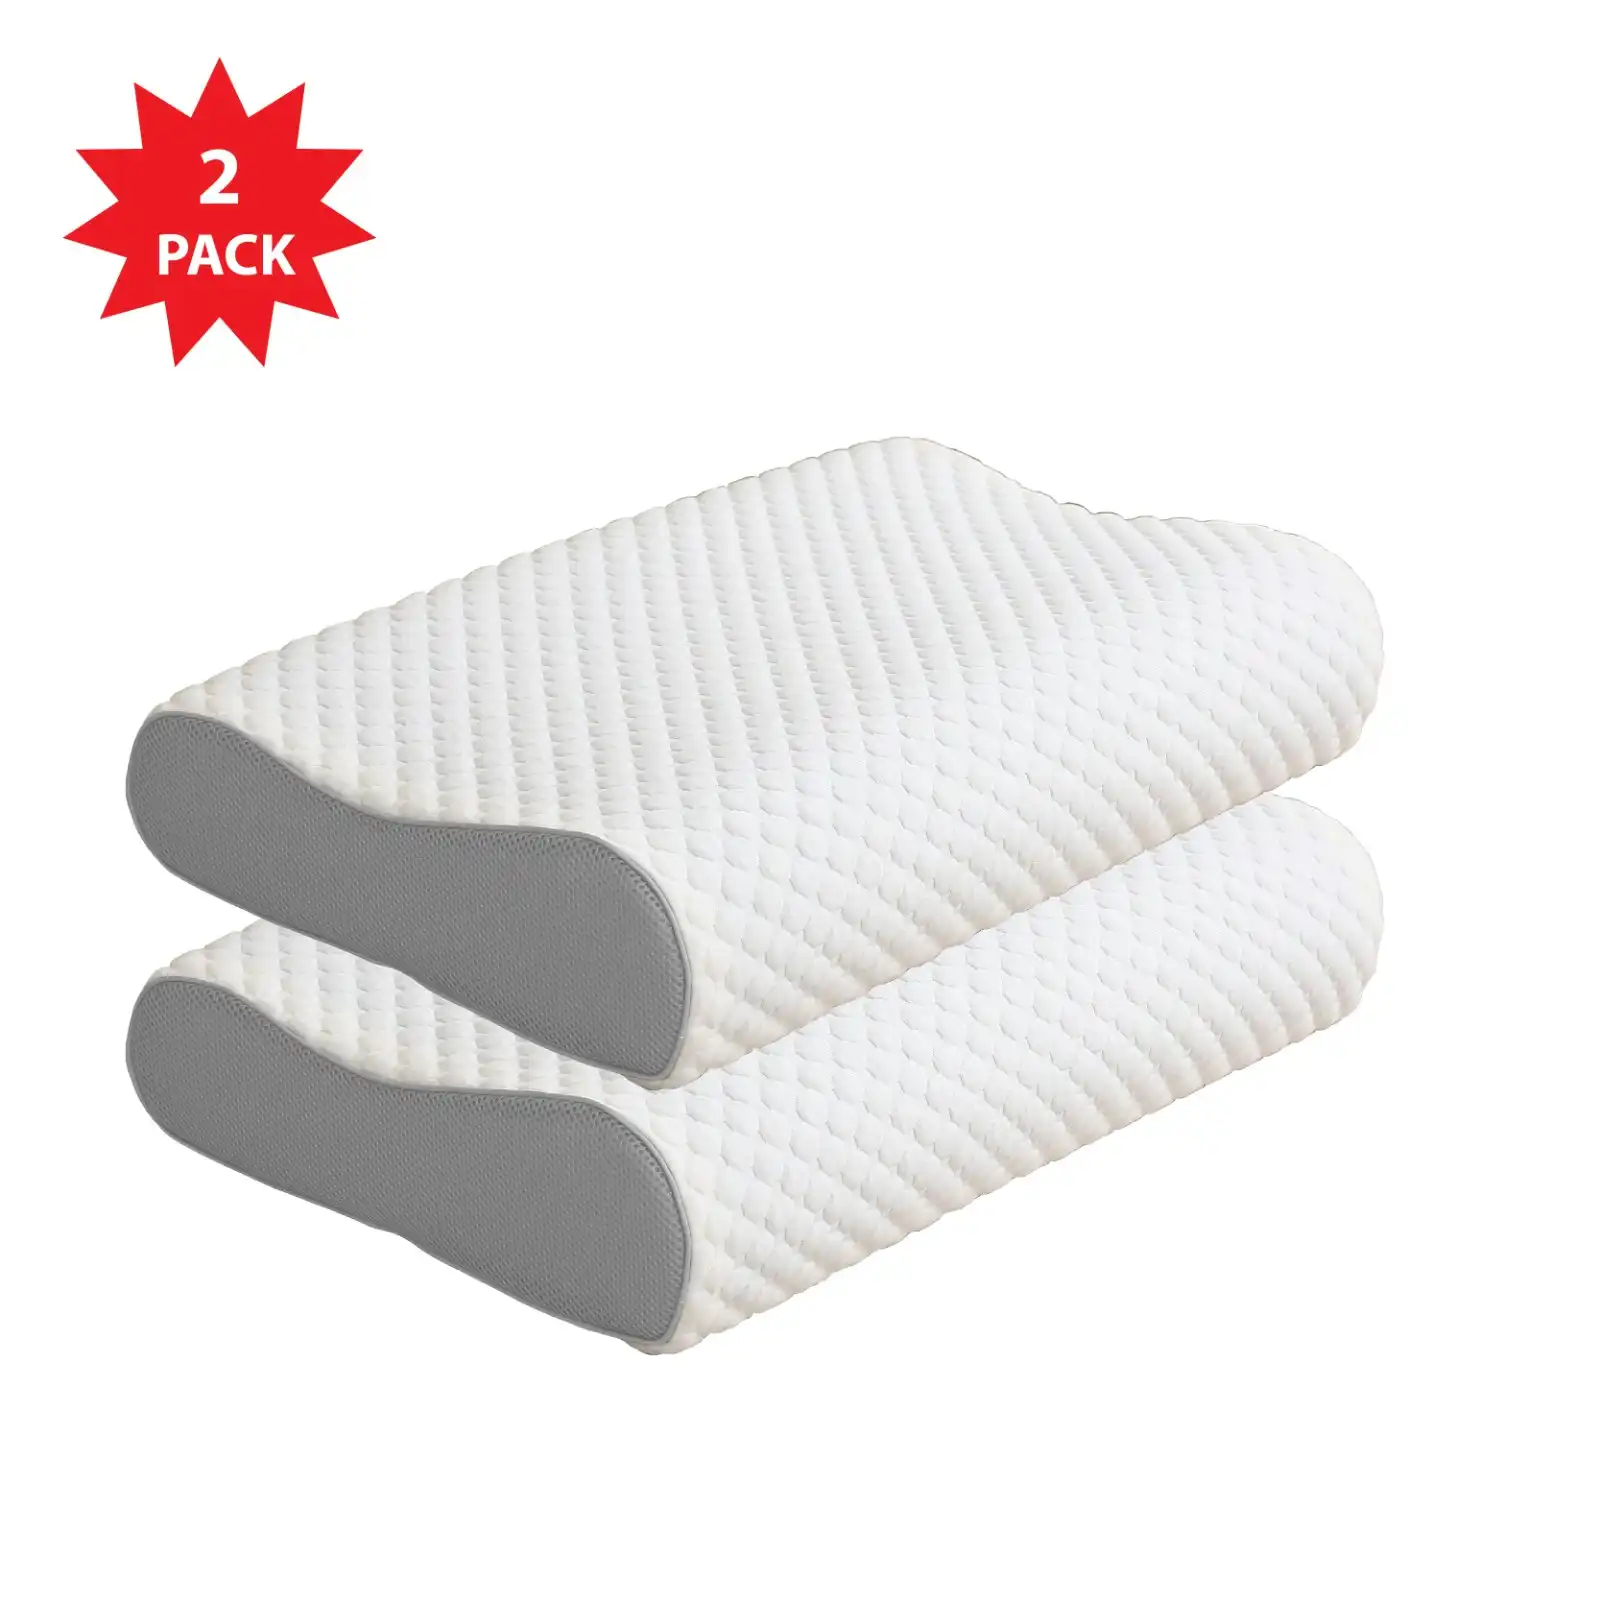 Vistara Sound Sleep Memory Foam Contour Pillow 60x40cm - 2 Pack